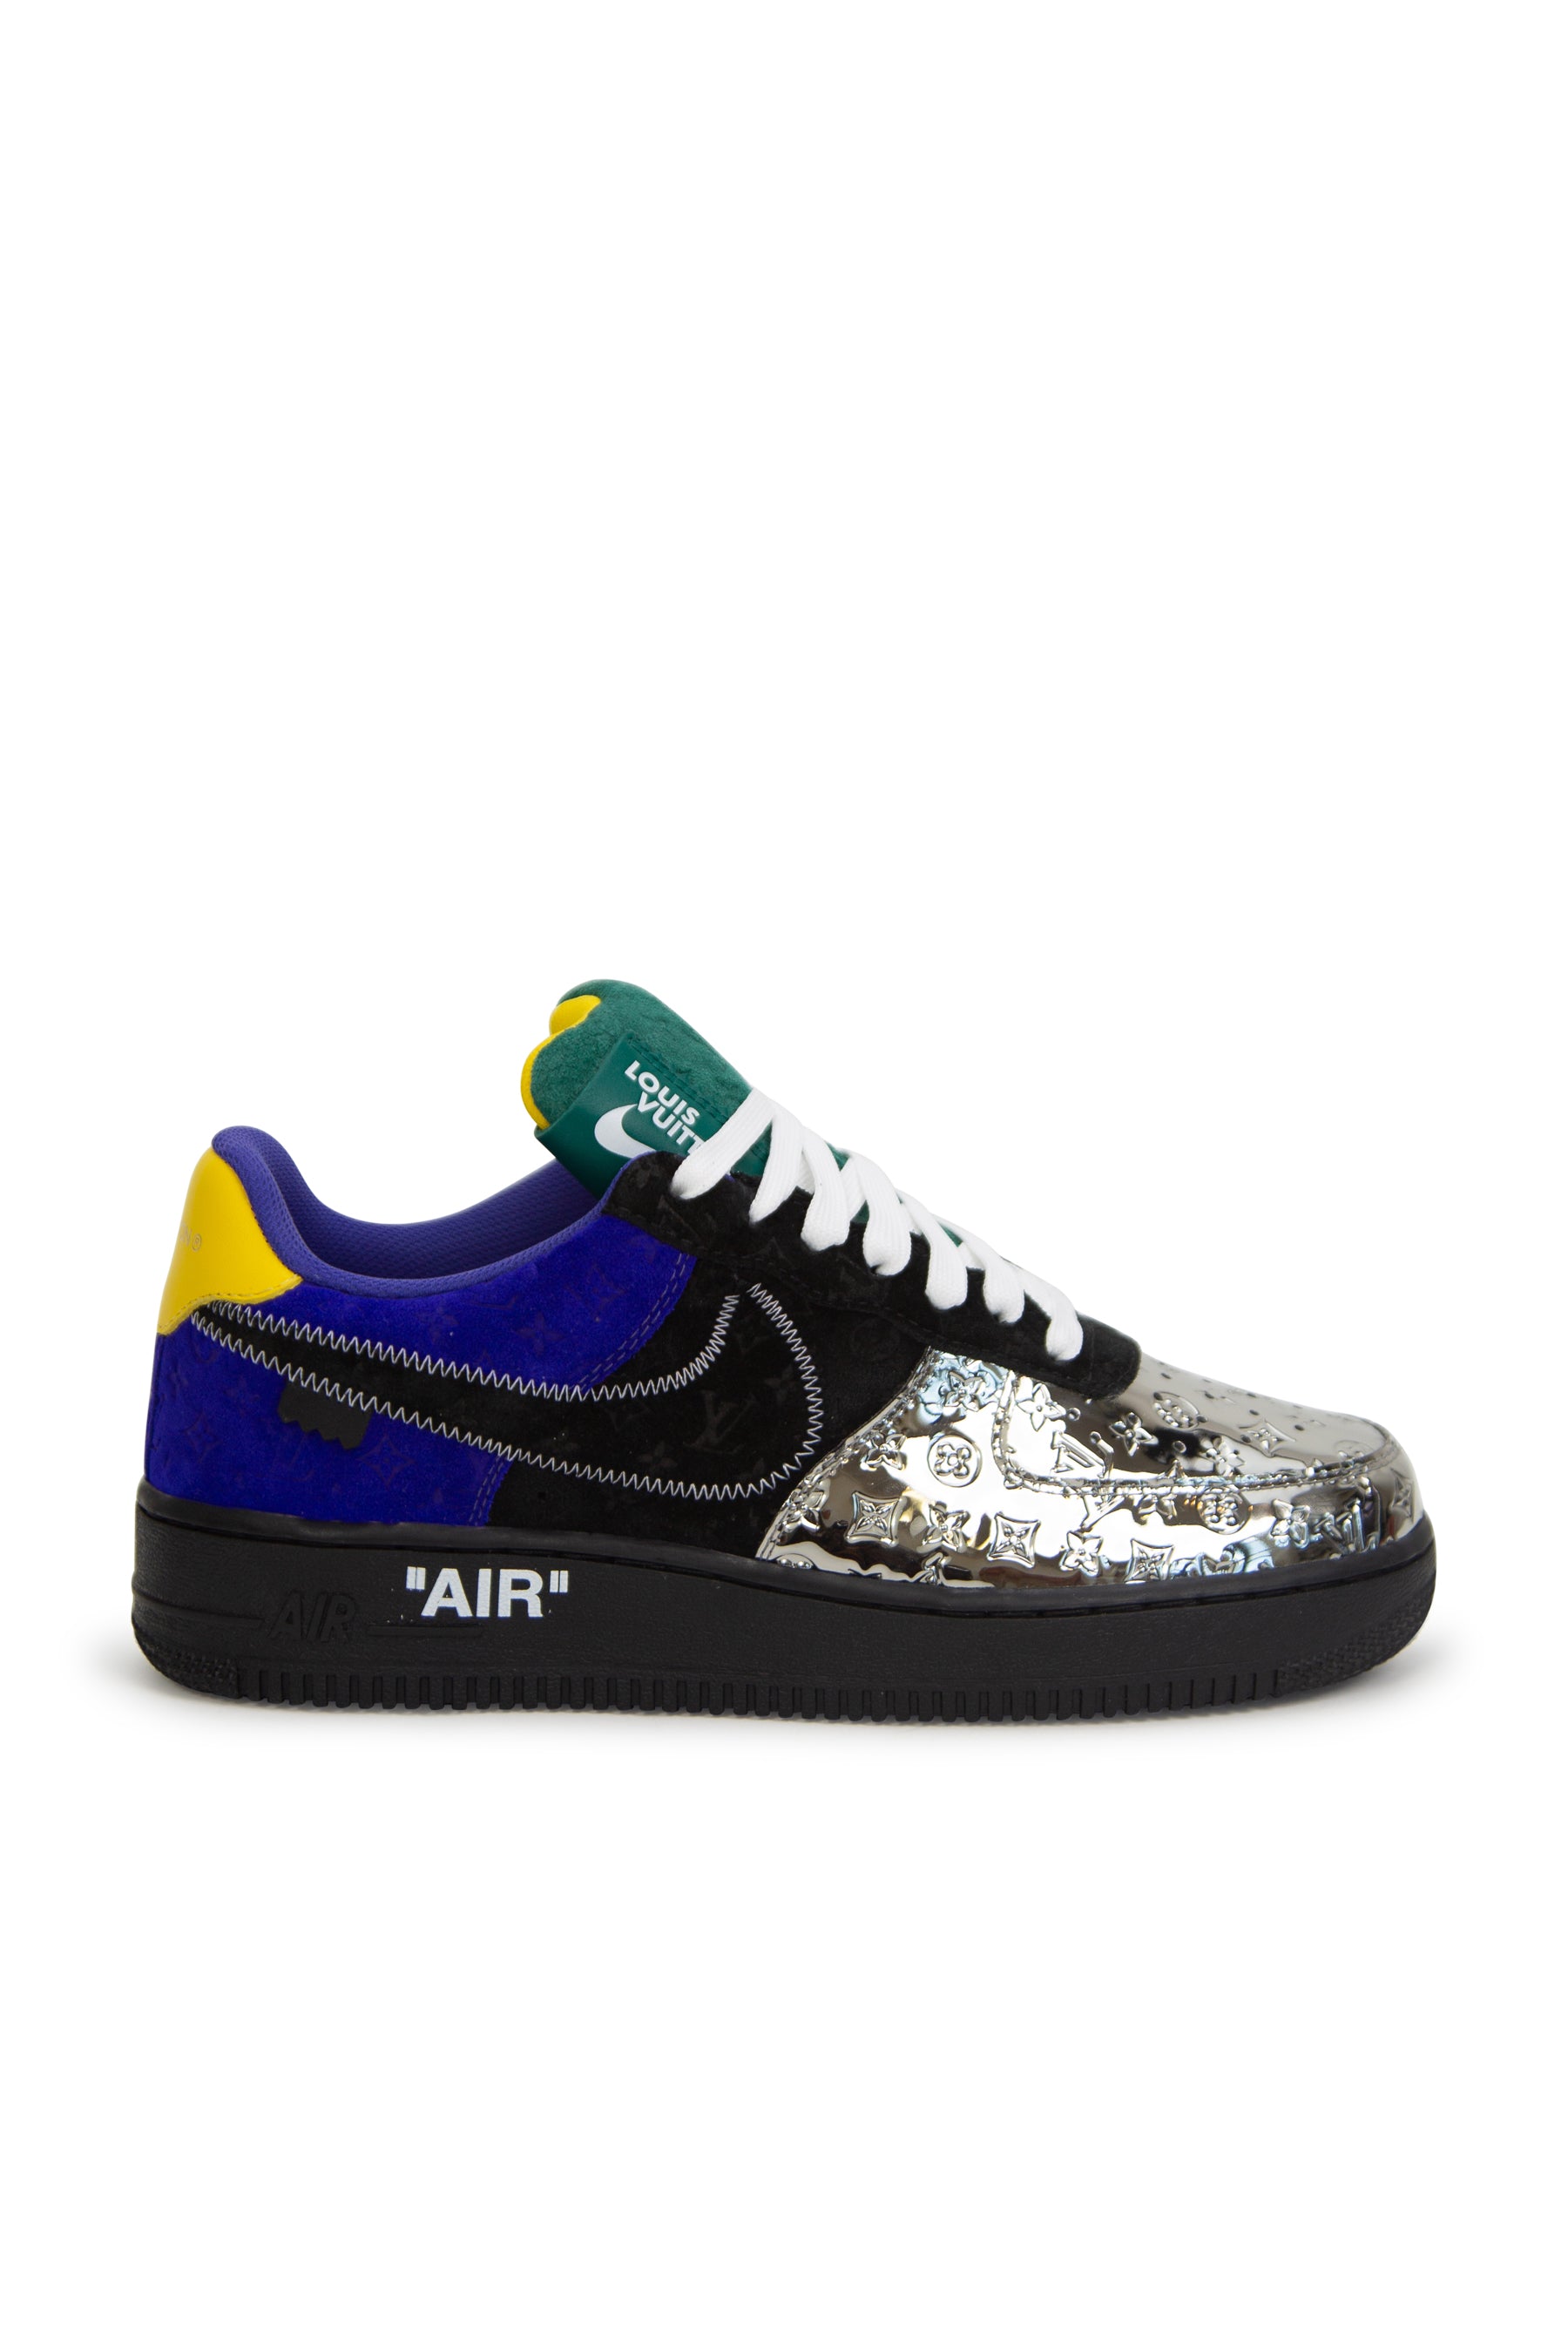 Louis Vuitton X Nike Air Force 1 Sneakers